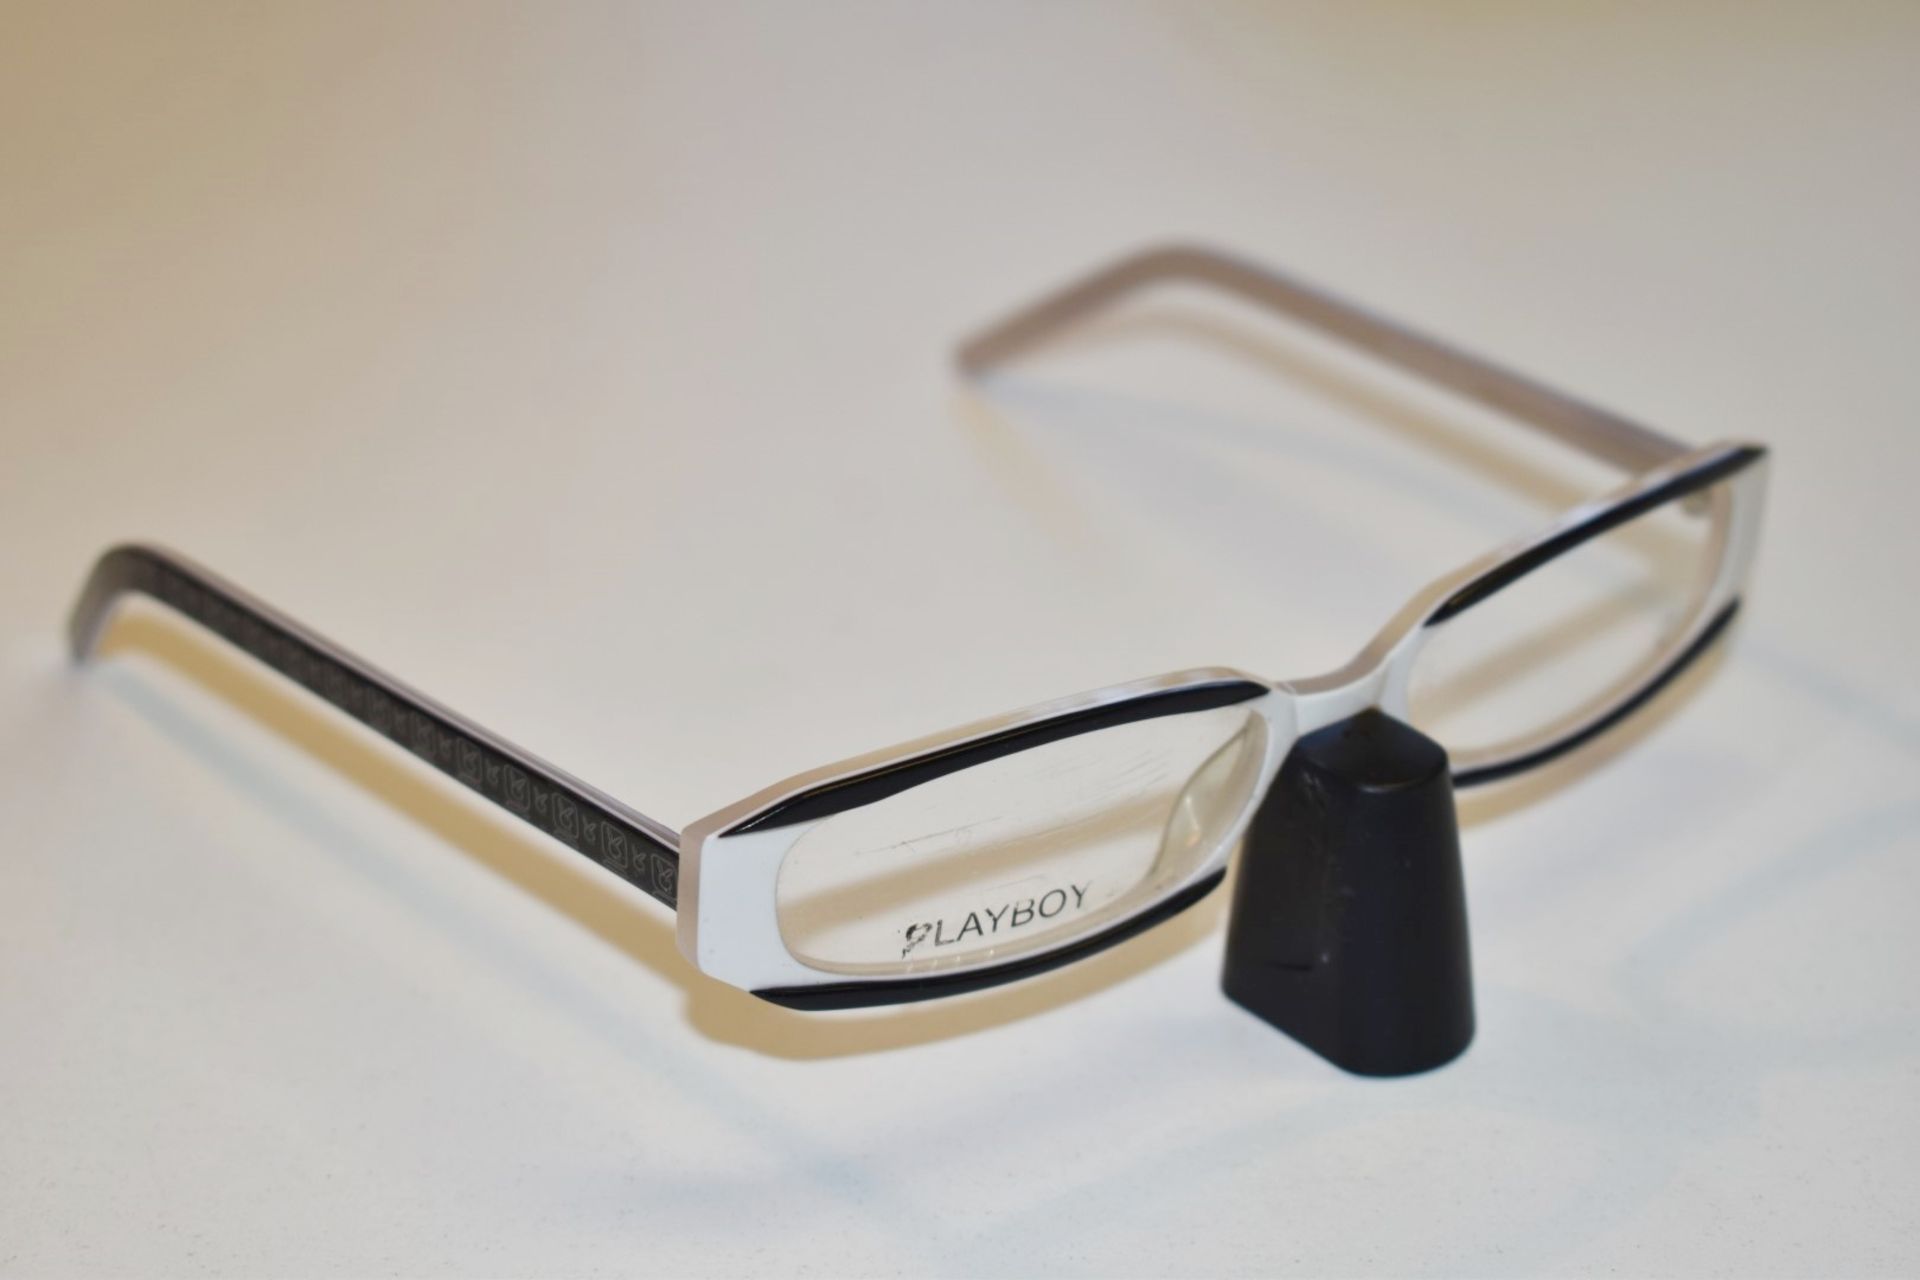 1 x Genuine PLAYBOY Spectacle Eye Glasses Frame - Ex Display Stock  - Ref: GTI178 - CL645 -